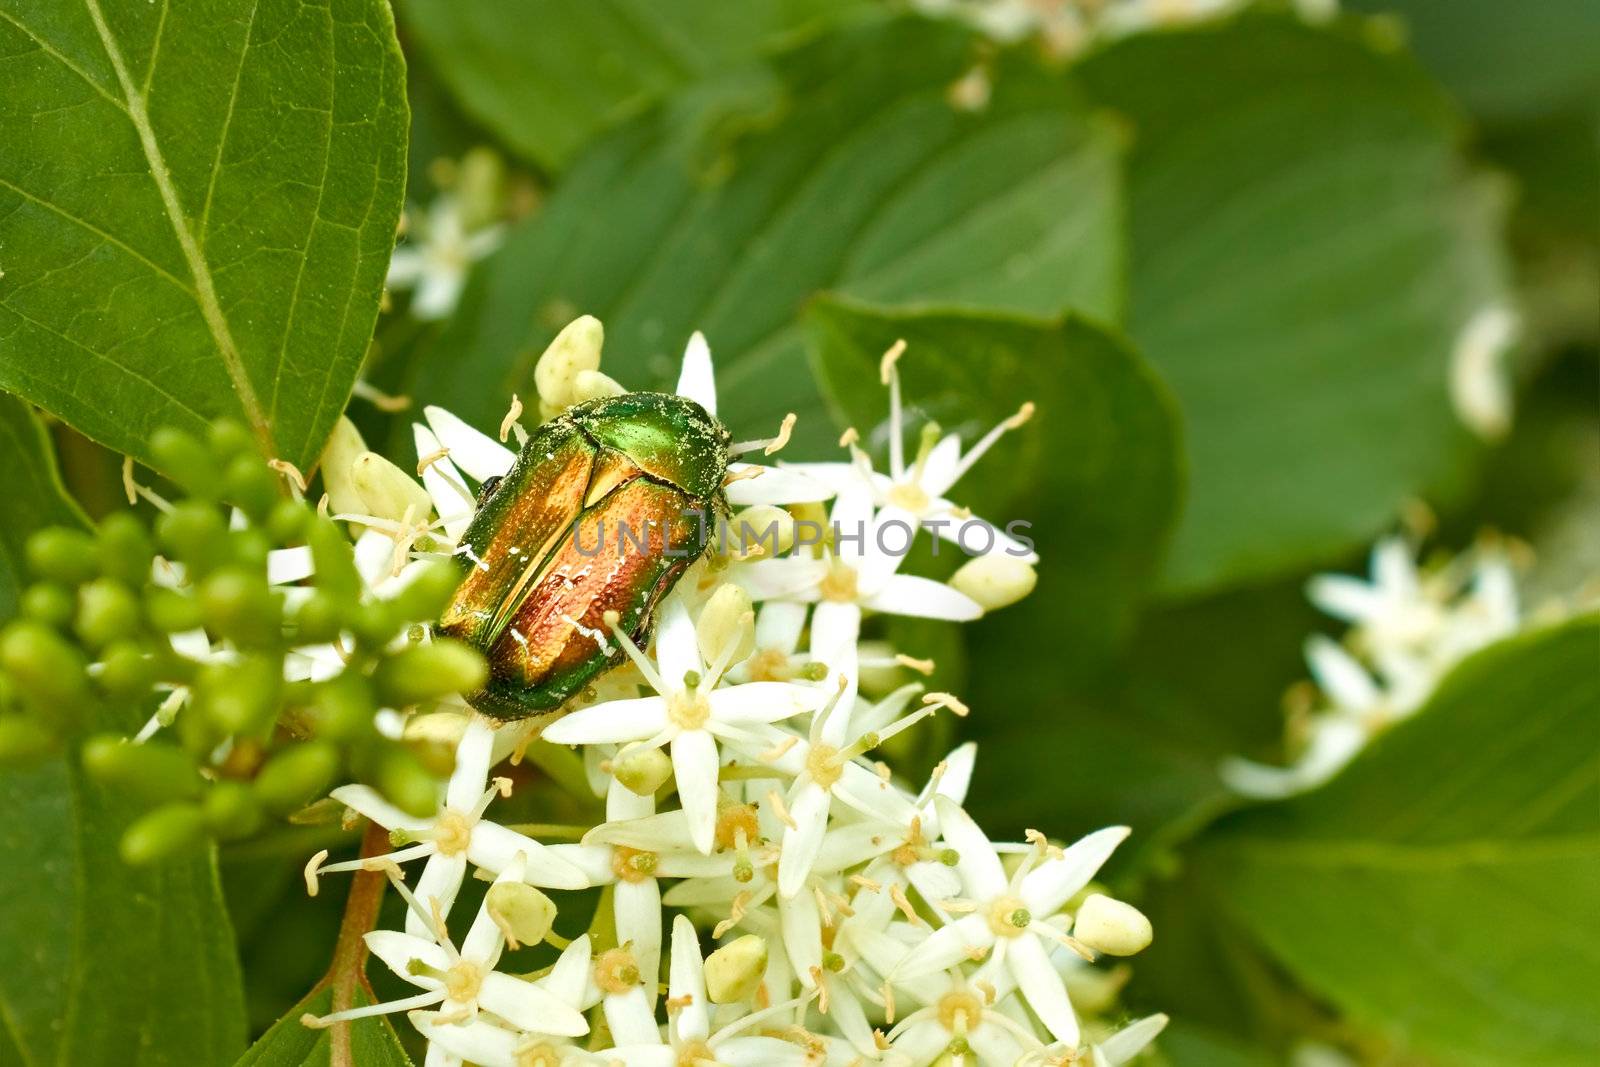 Green beetle on the flowering plants by qiiip